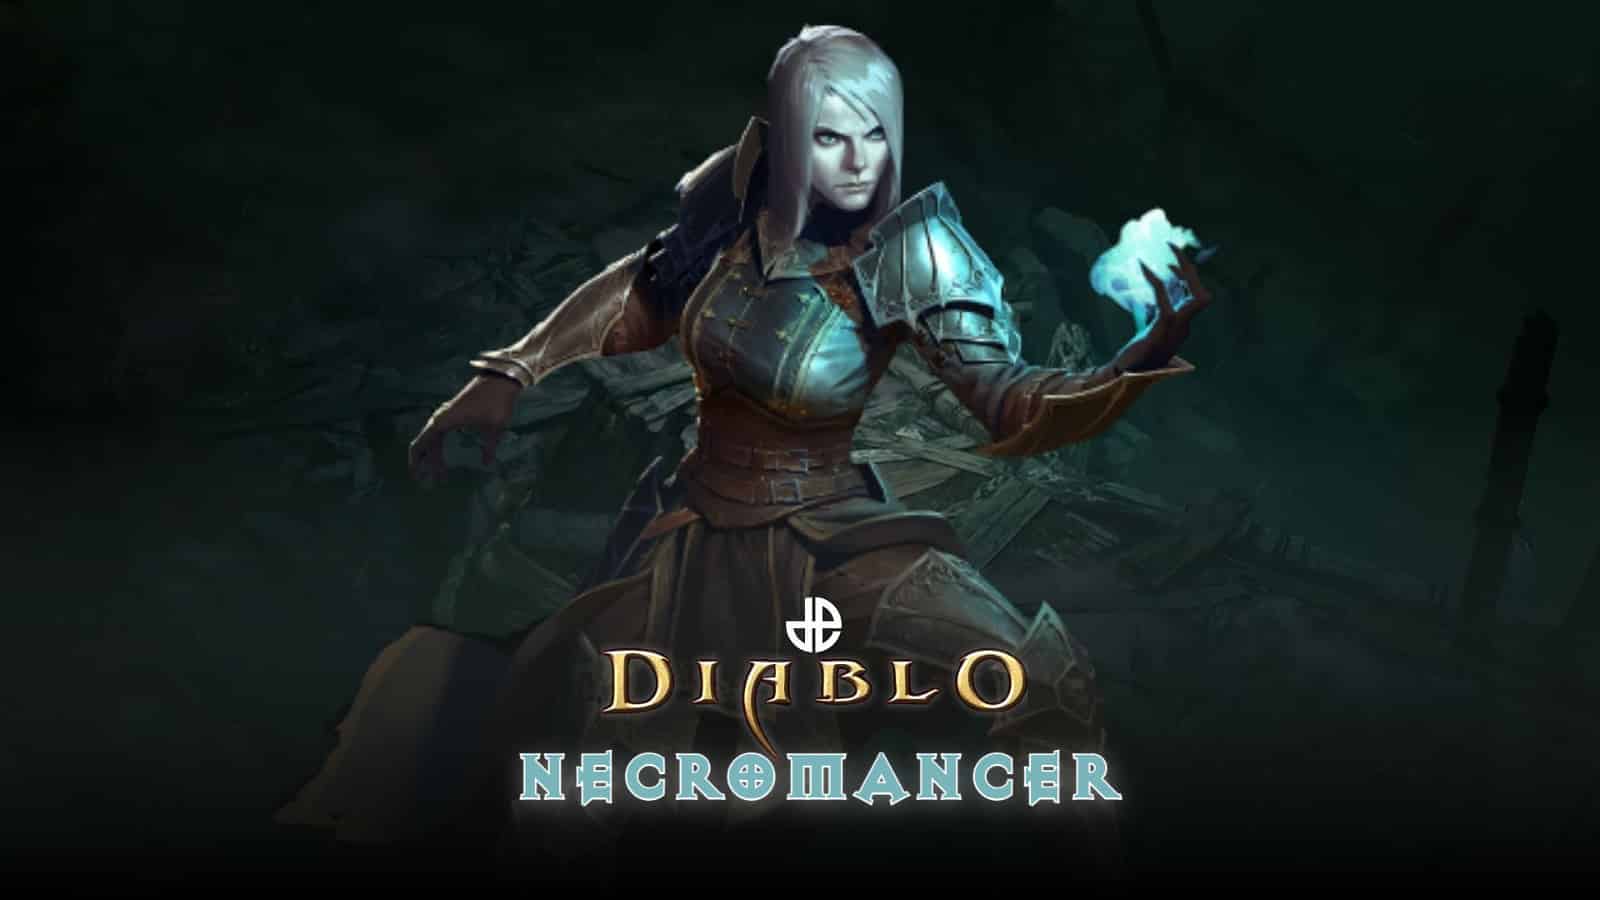 The female Necromancer on a dark background, with the Diablo logo